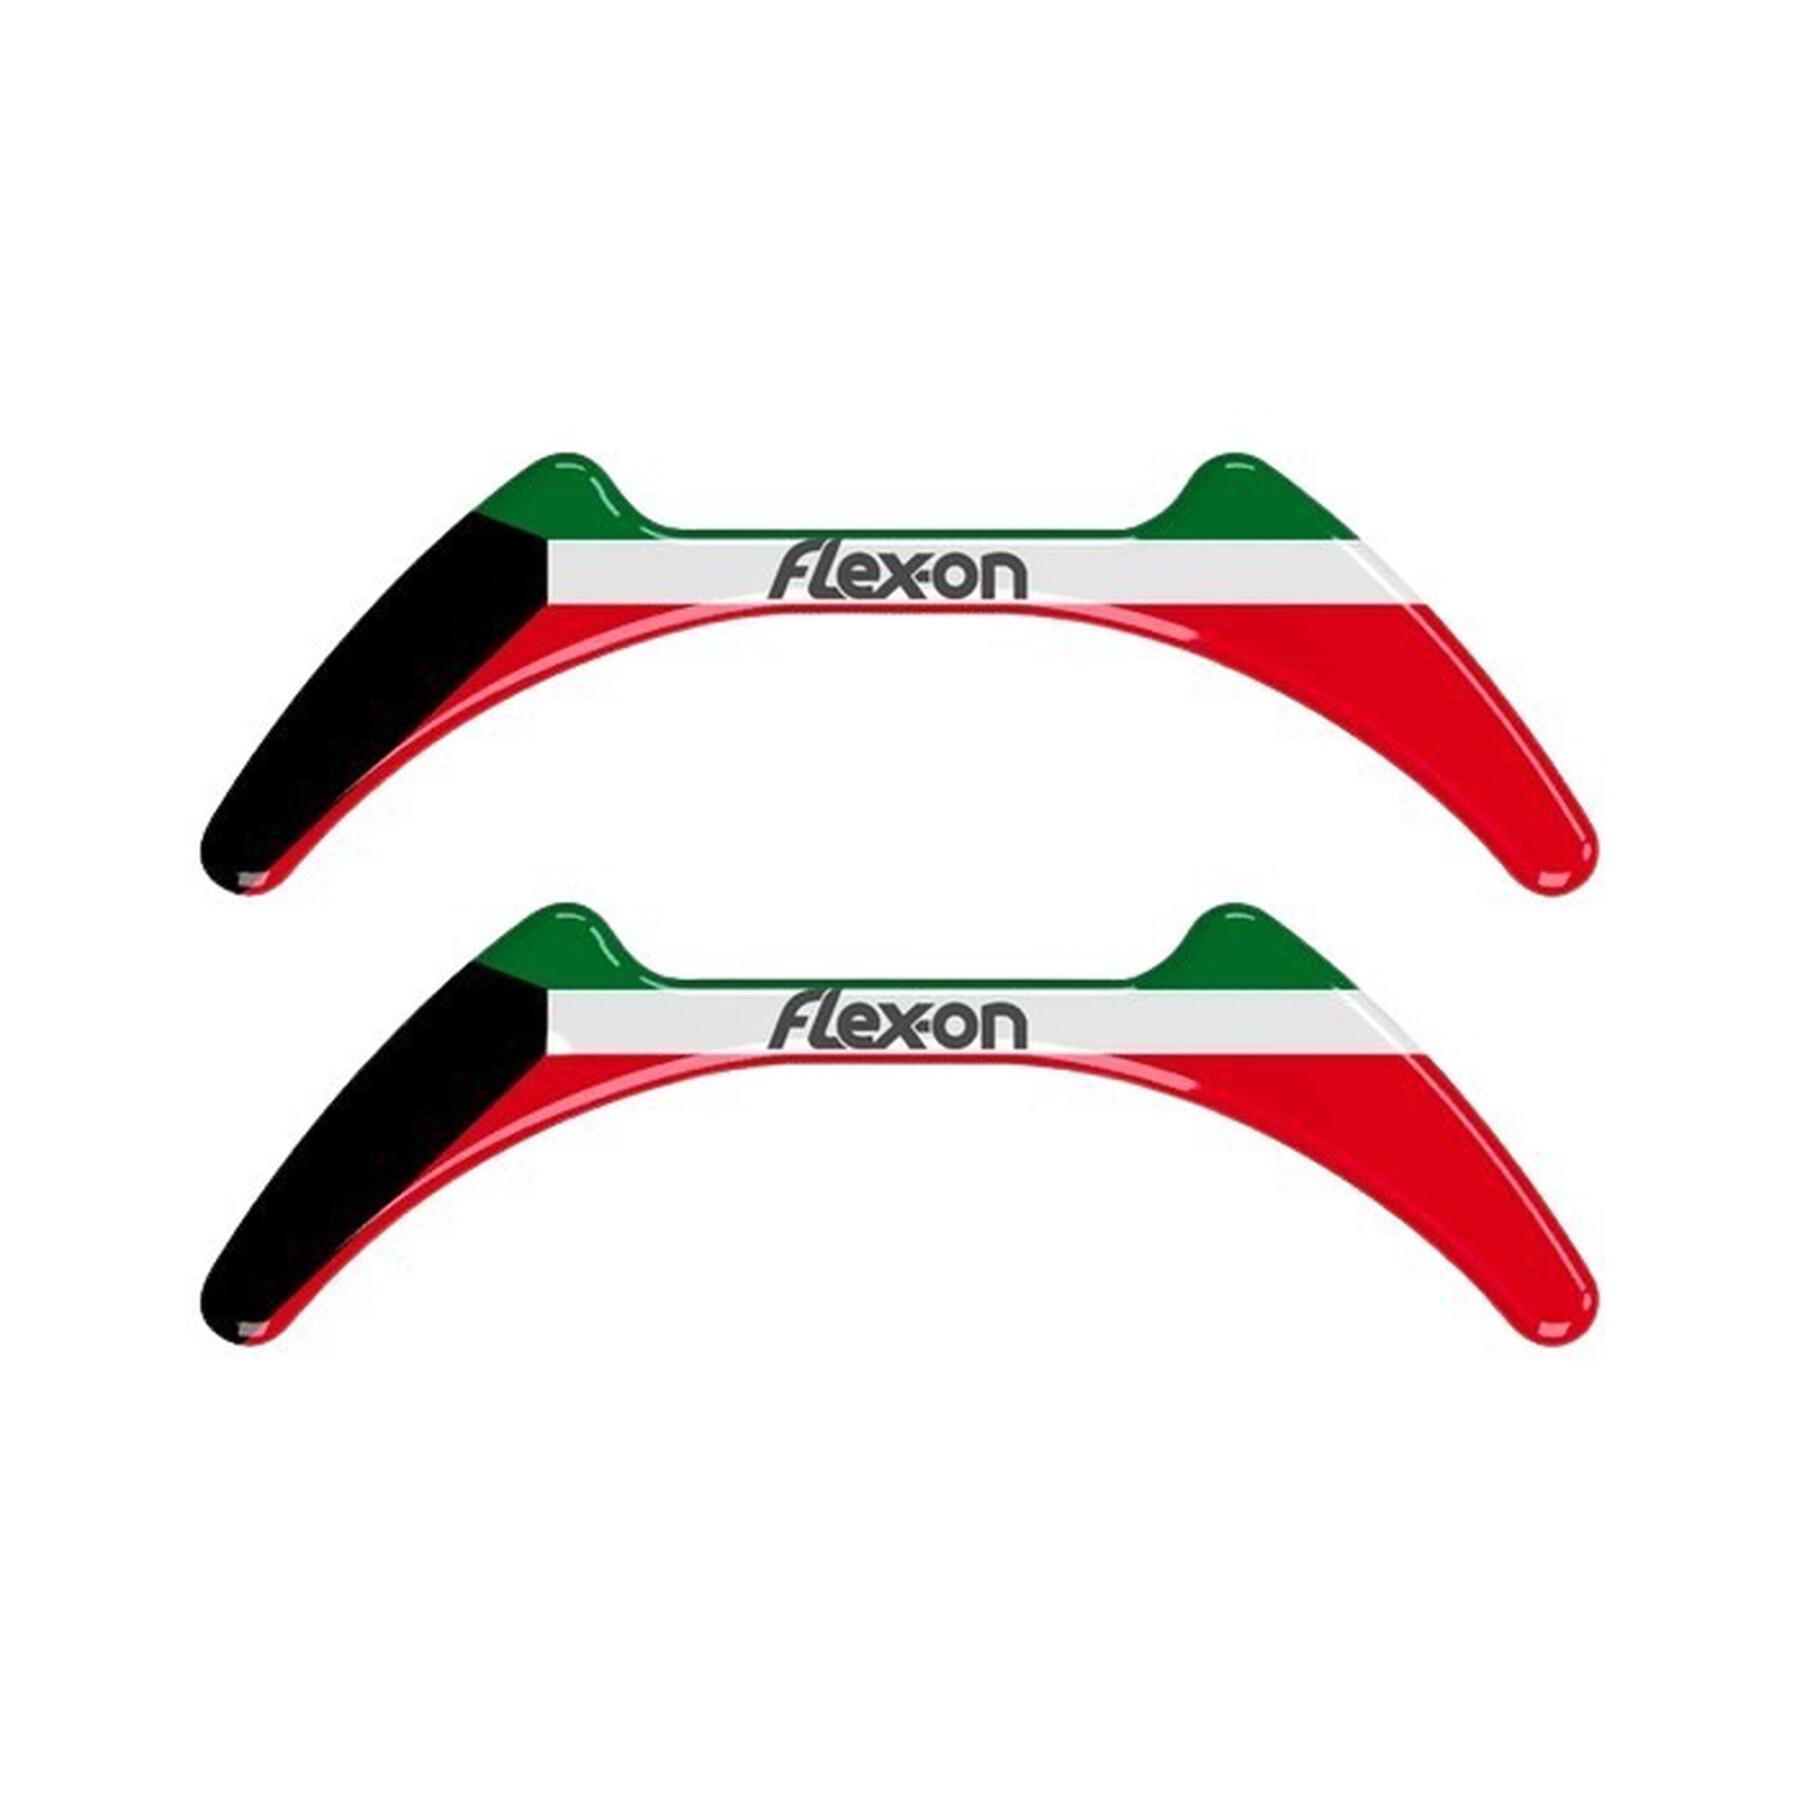 Riding stickers Flex On Koweit